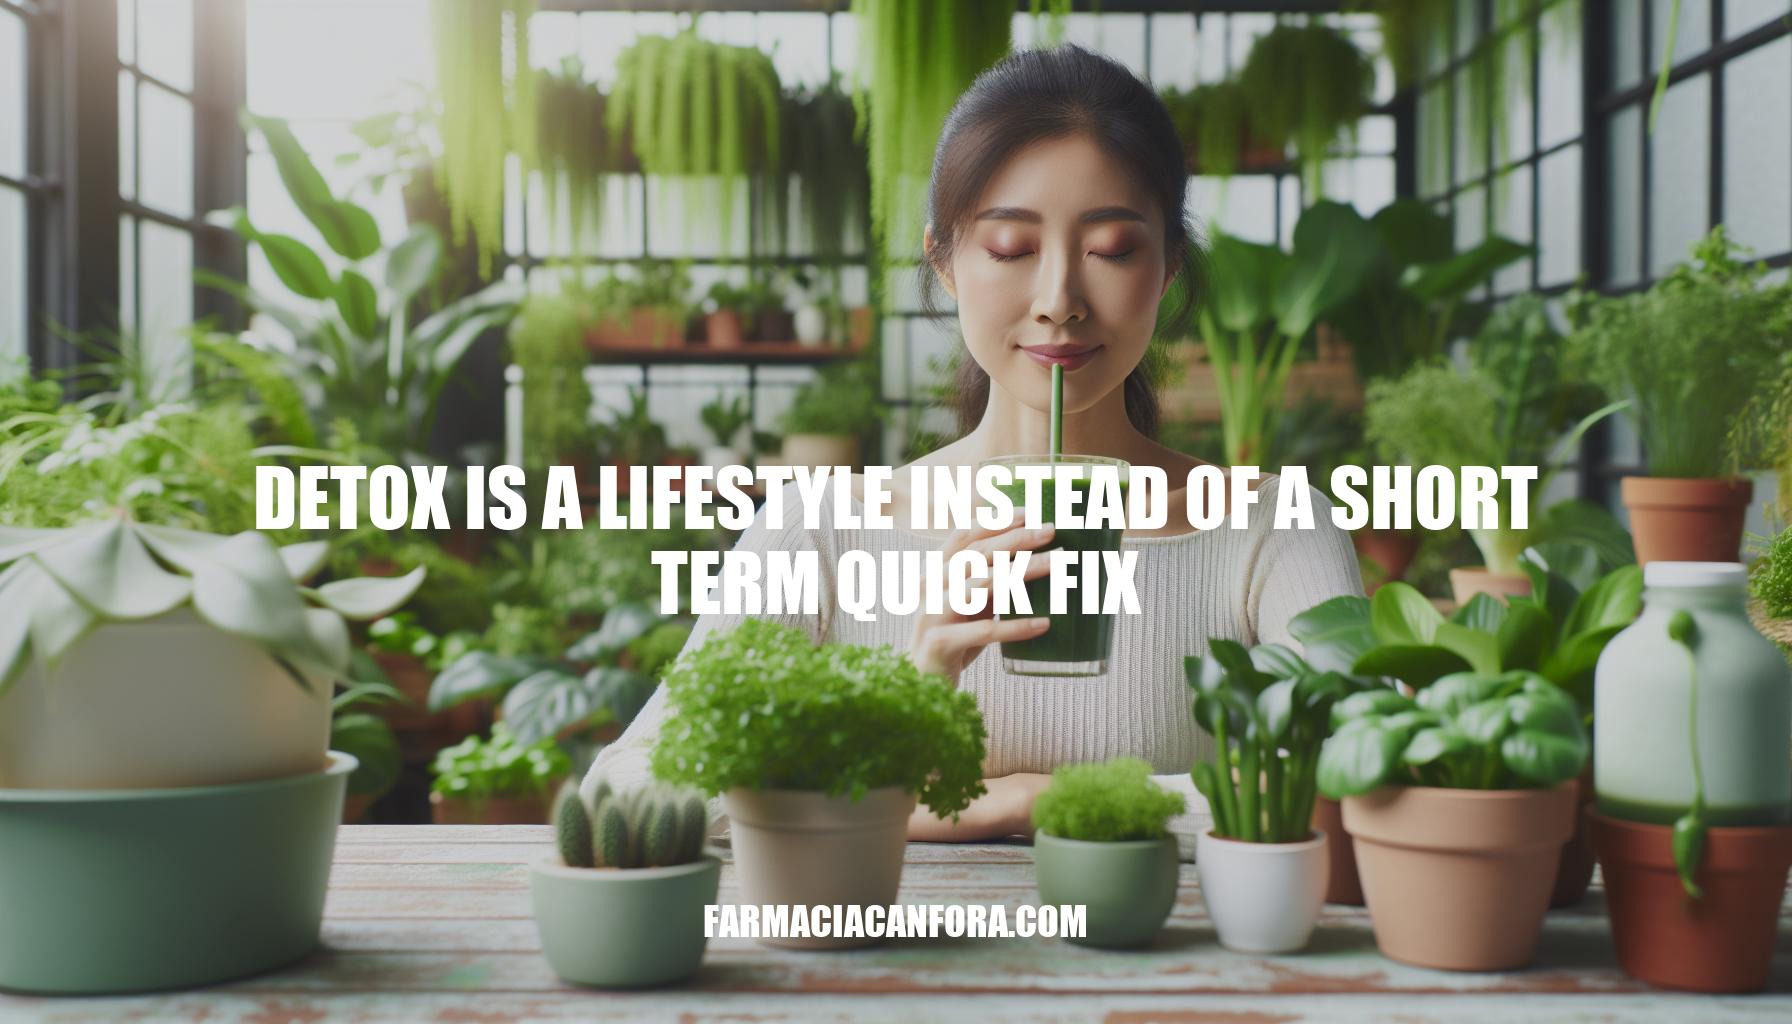 Detox: A Lifestyle, Not a Quick Fix